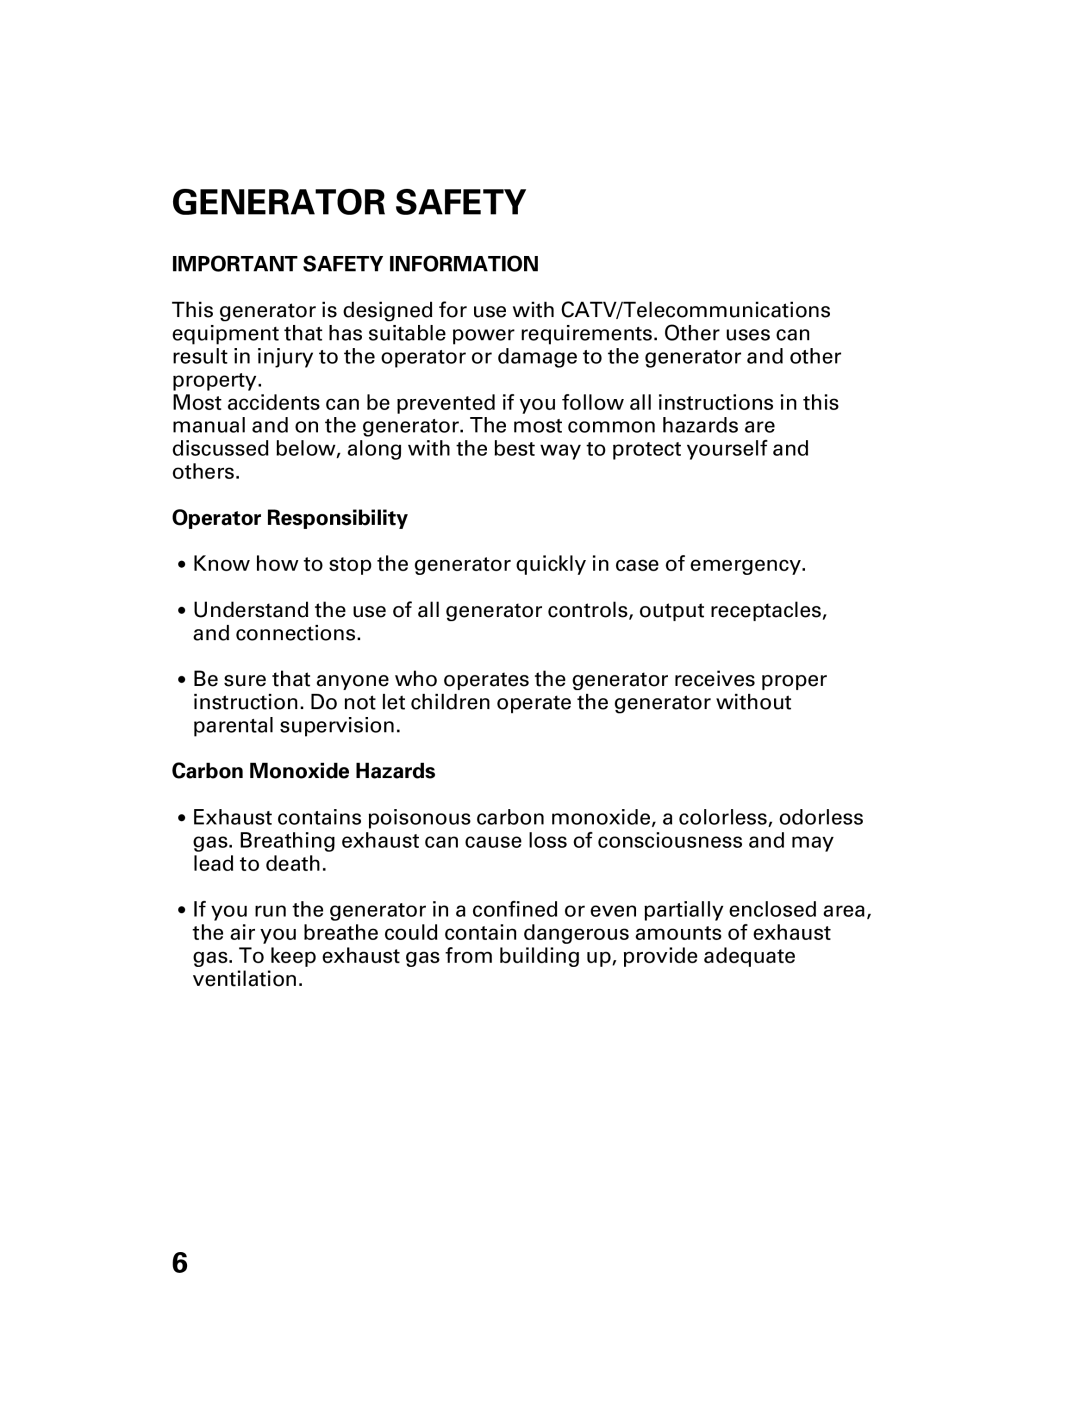 Honda Power Equipment DCX3000 manual Generator Safety, Important Safety Information, Operator Responsibility 